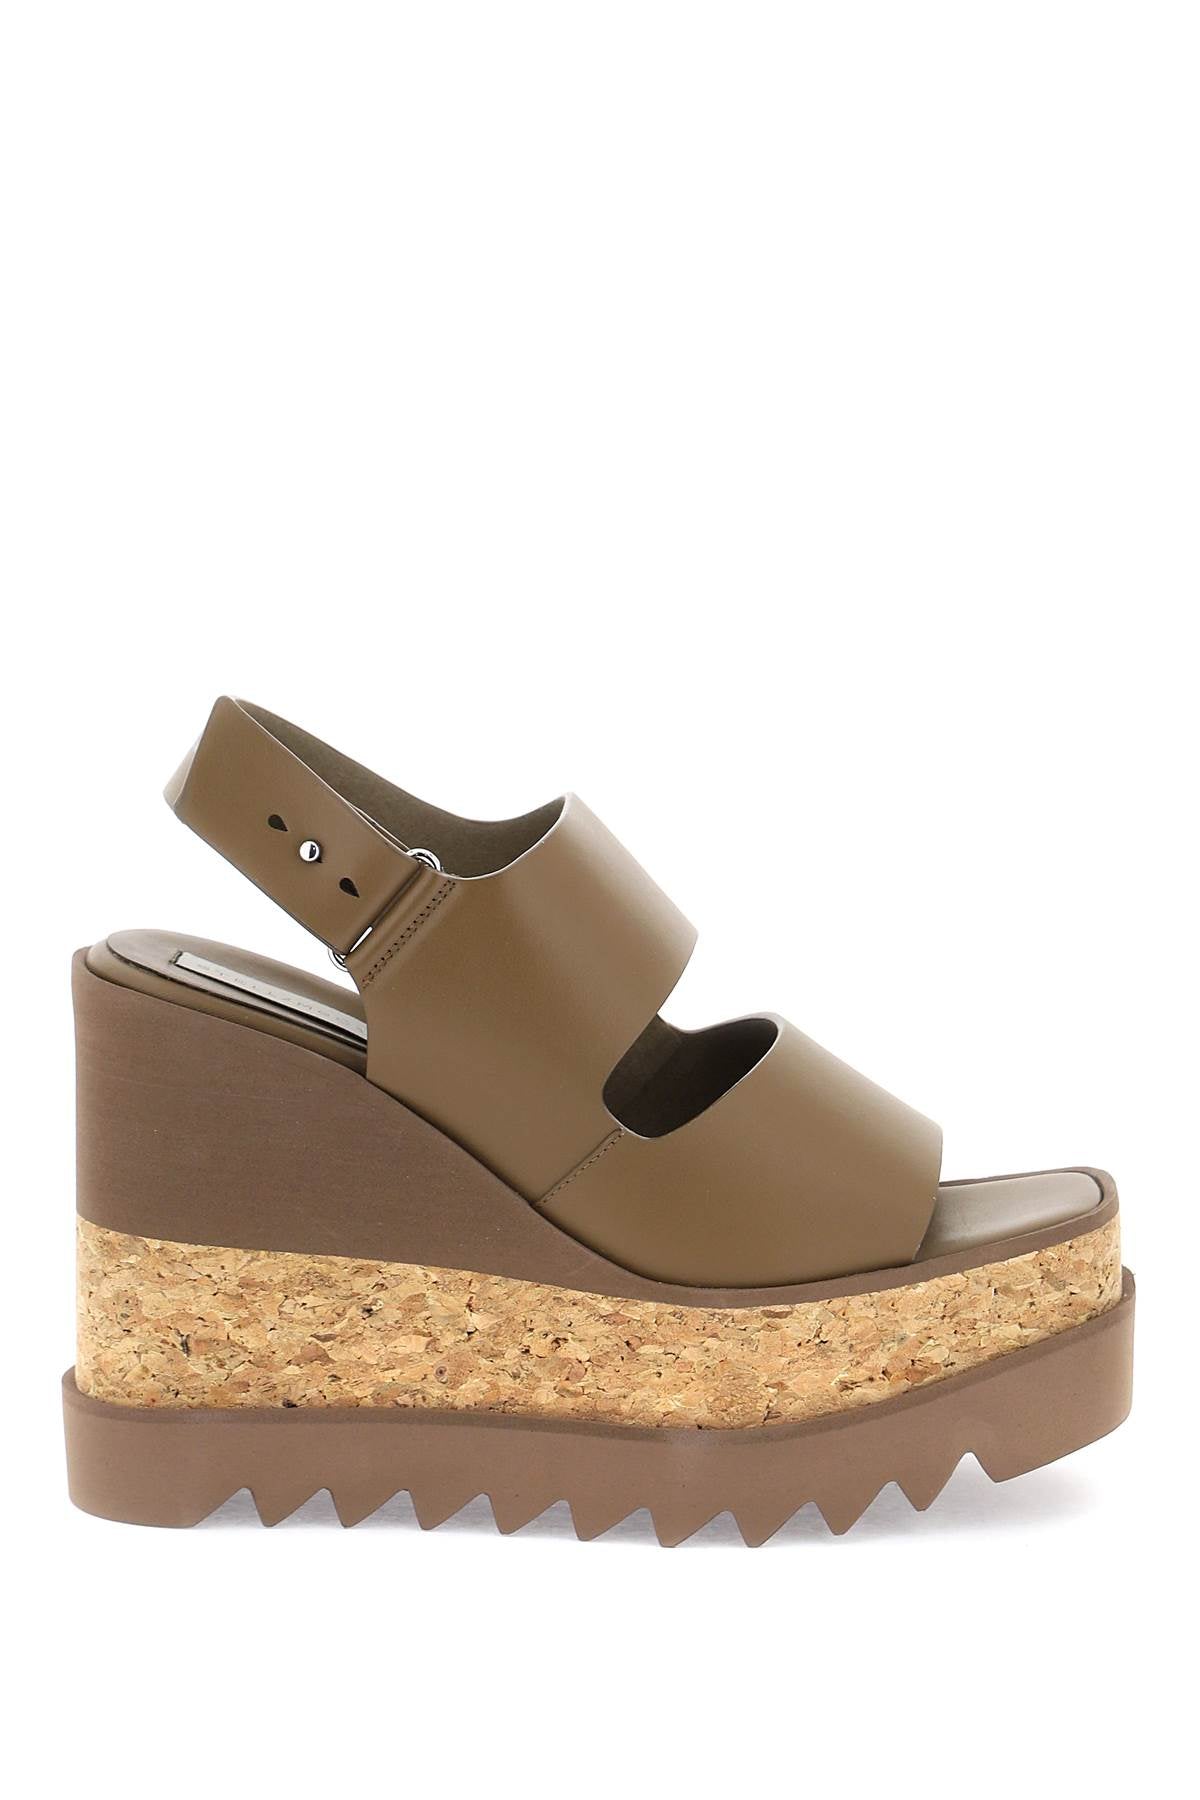 Stella mccartney elyse platform sandals with wedge-women > shoes > sandals-Stella McCartney-Urbanheer